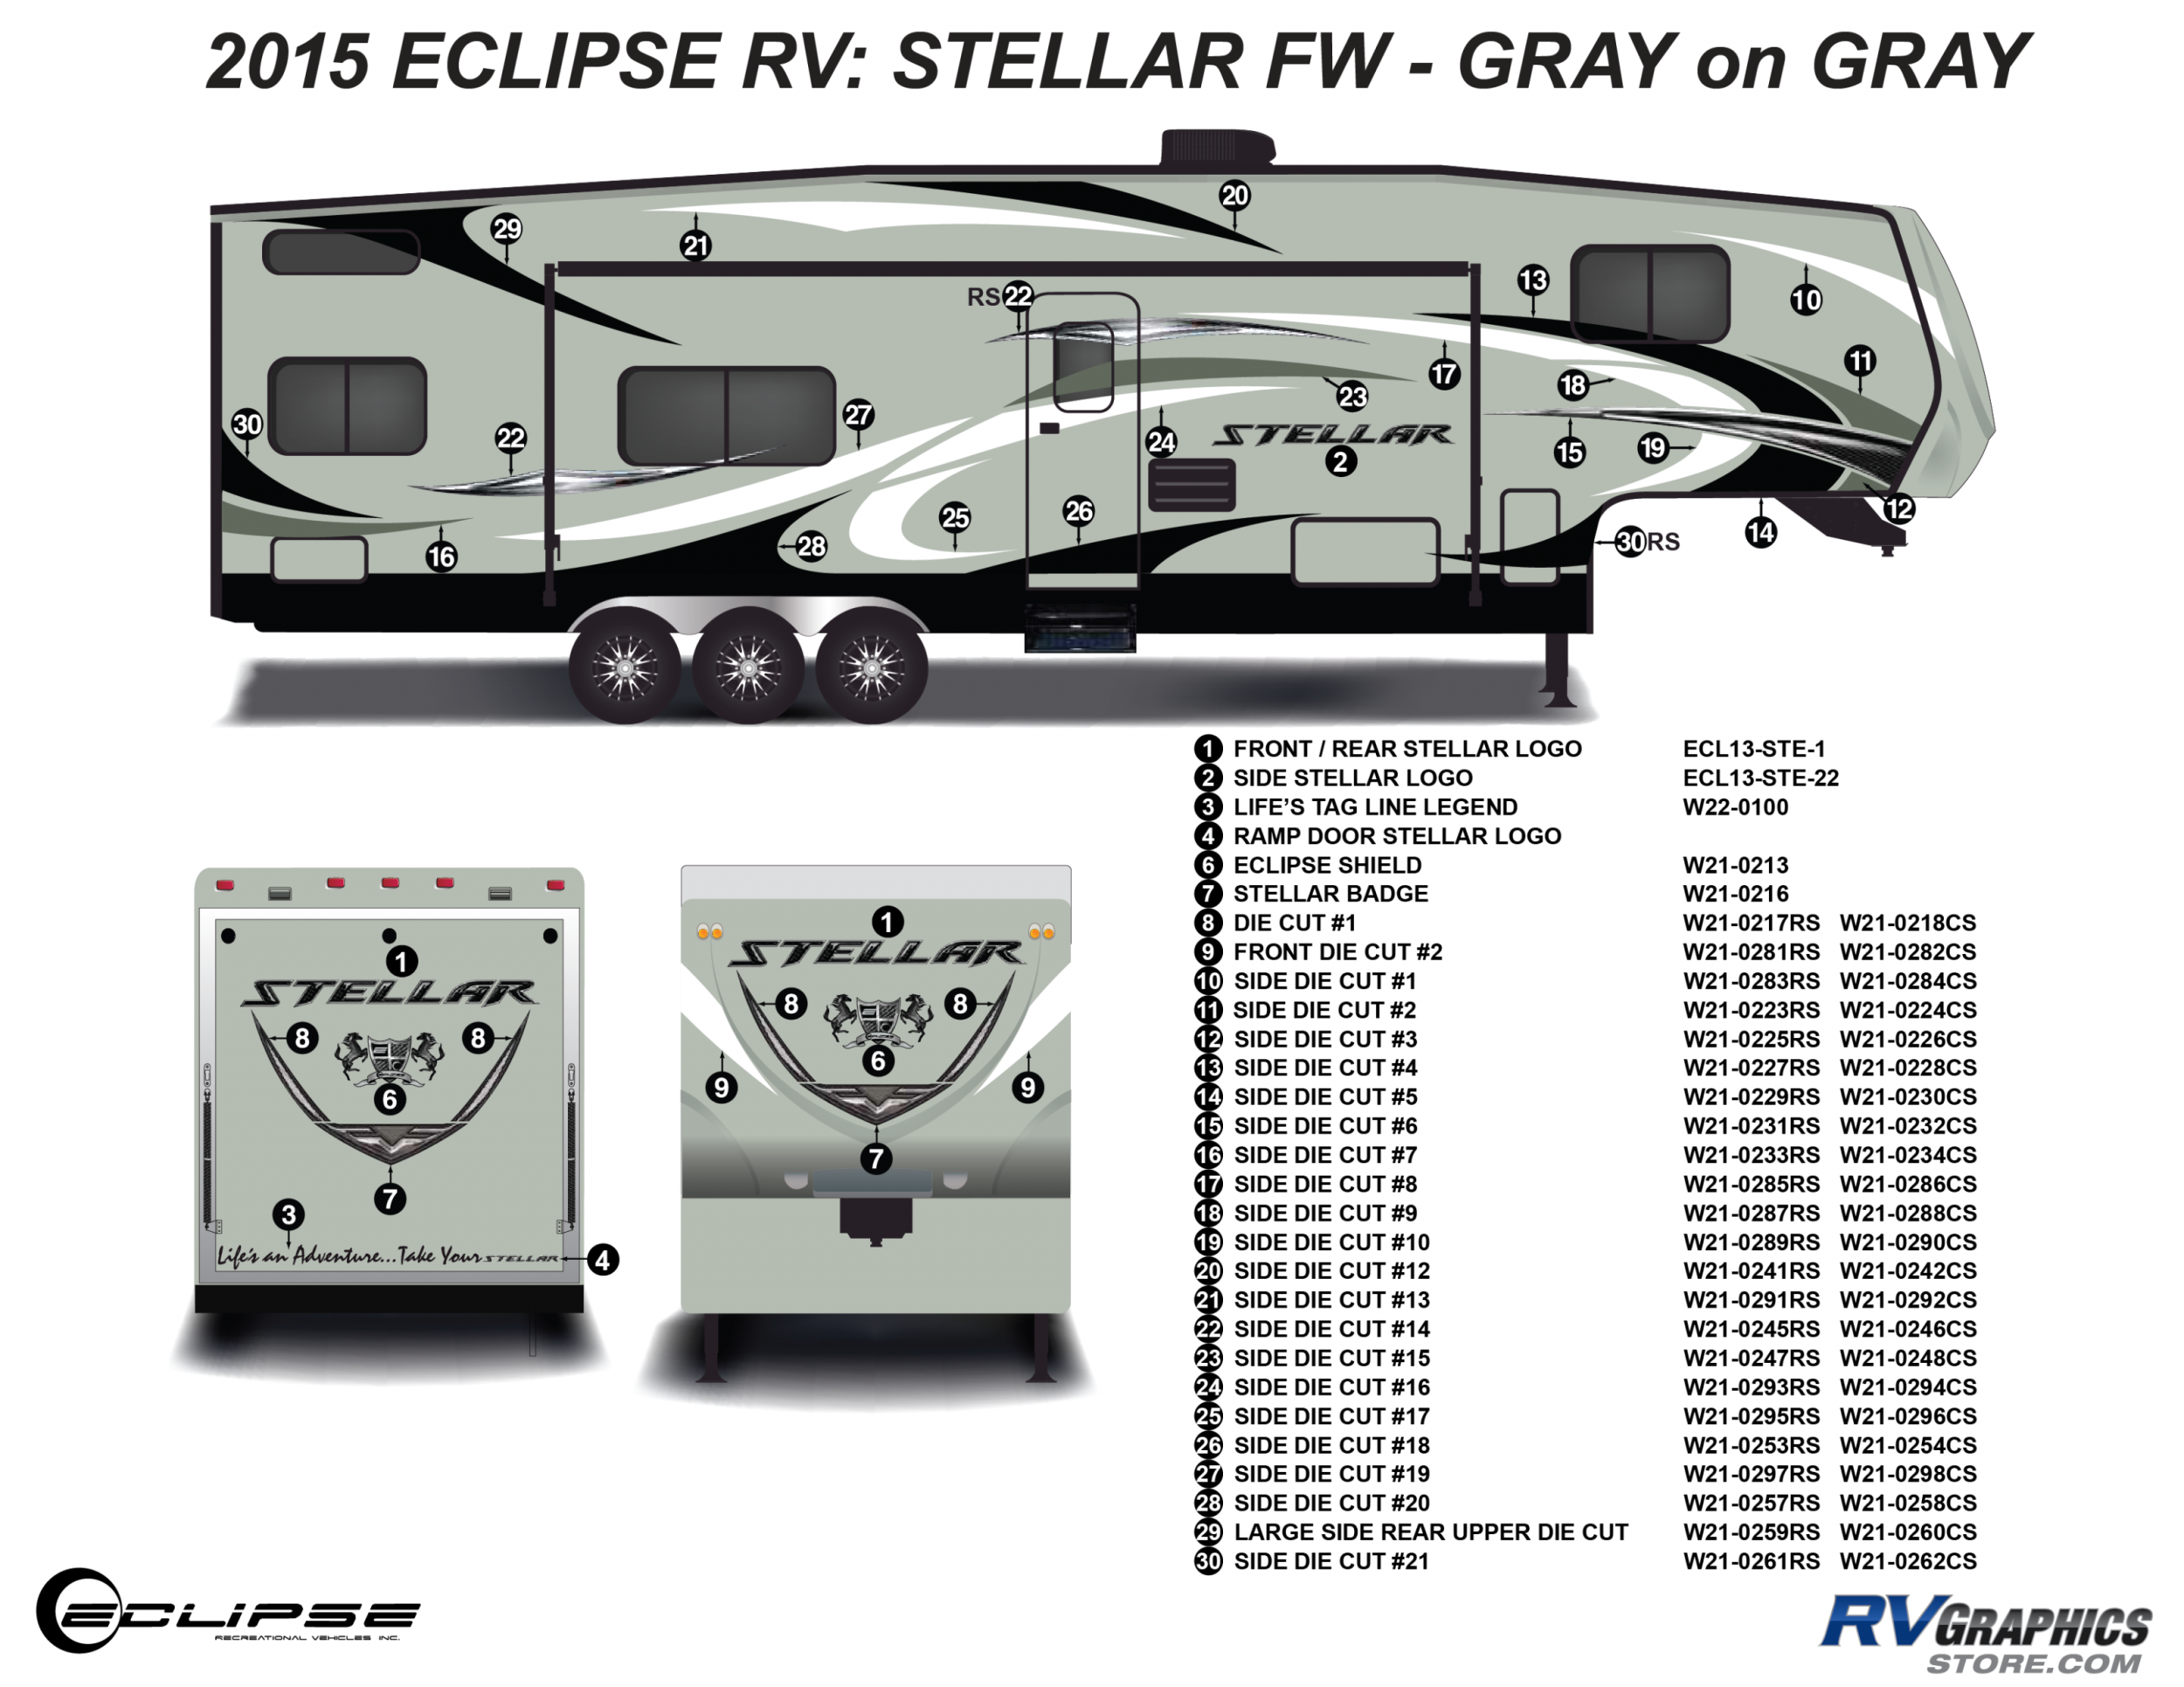 Stellar - 2015 Stellar Gray on Gray Fifth Wheel